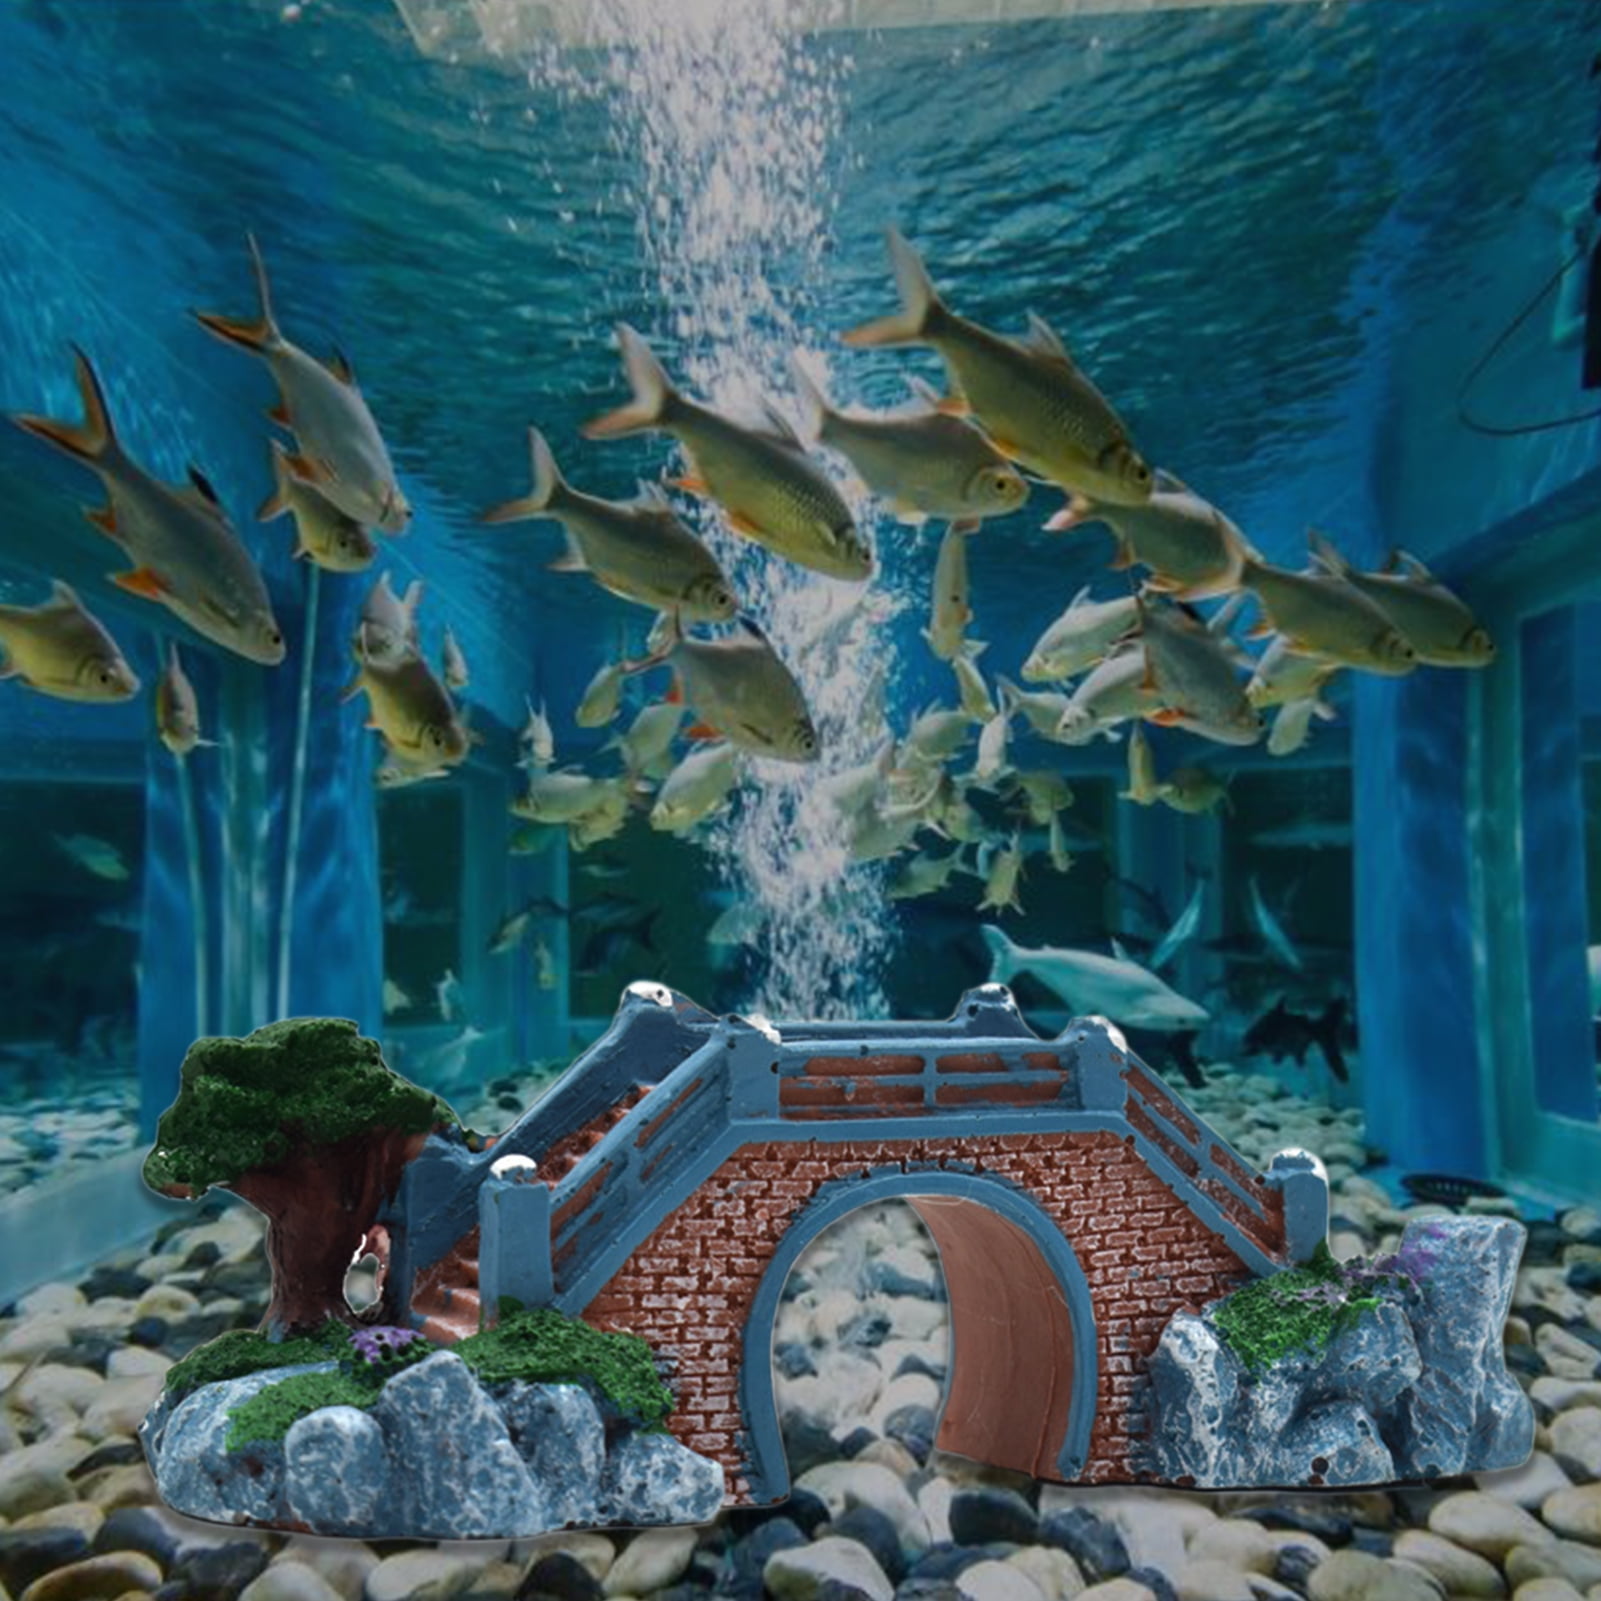 Romote Fish Tank Resin Bridge Decorations Ancient Landscape Scenery Aquarium Fish Tank Ornaments Landscape Aquarium Accessories 